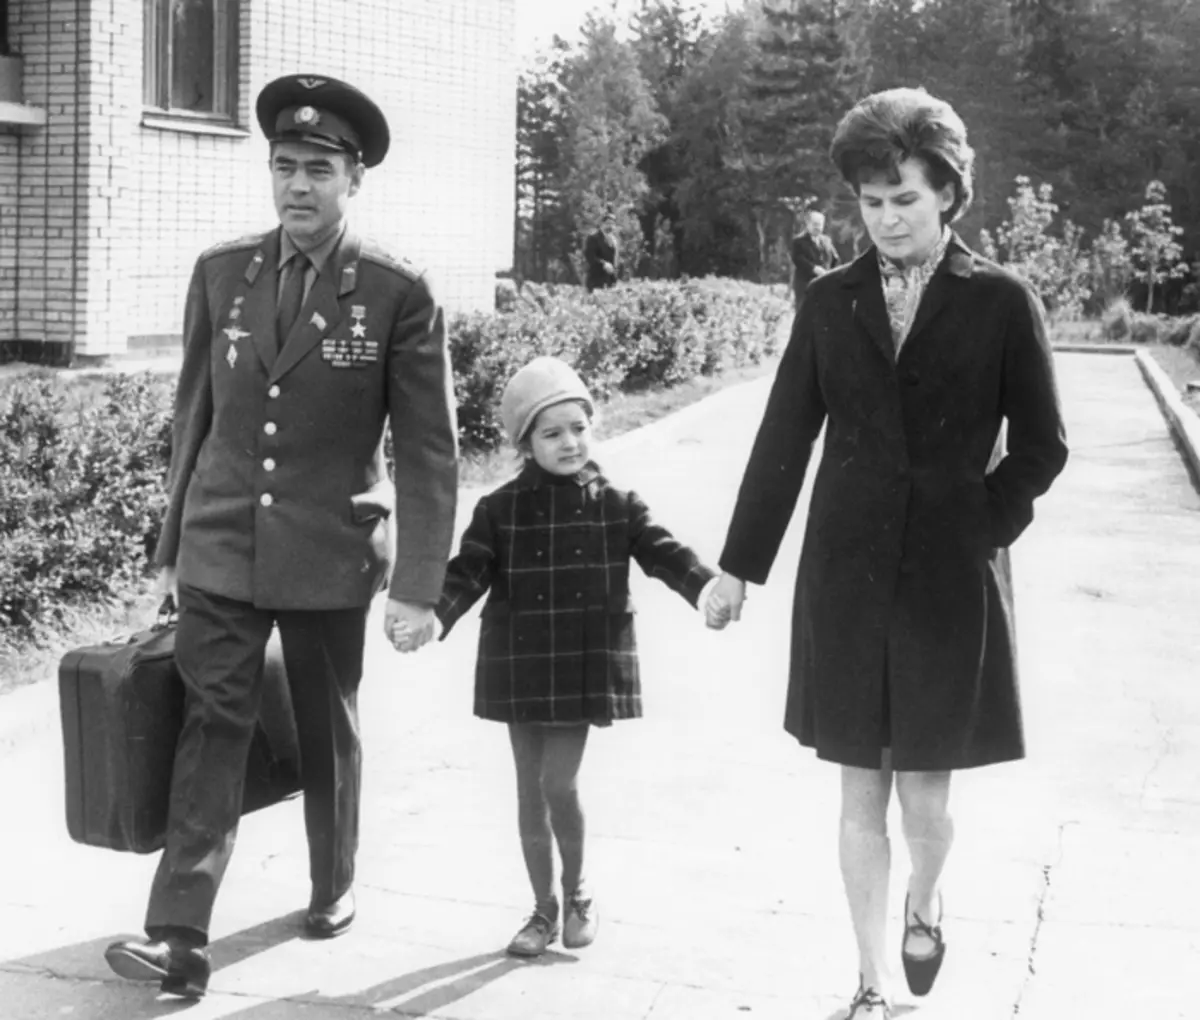 Segundo rumores, o casamento de Andriyan Nikolaev e Tereshkova foi planejado pelo próprio Nikita Khrushchev. Logo a única filha do cosmonautas Elena apareceu